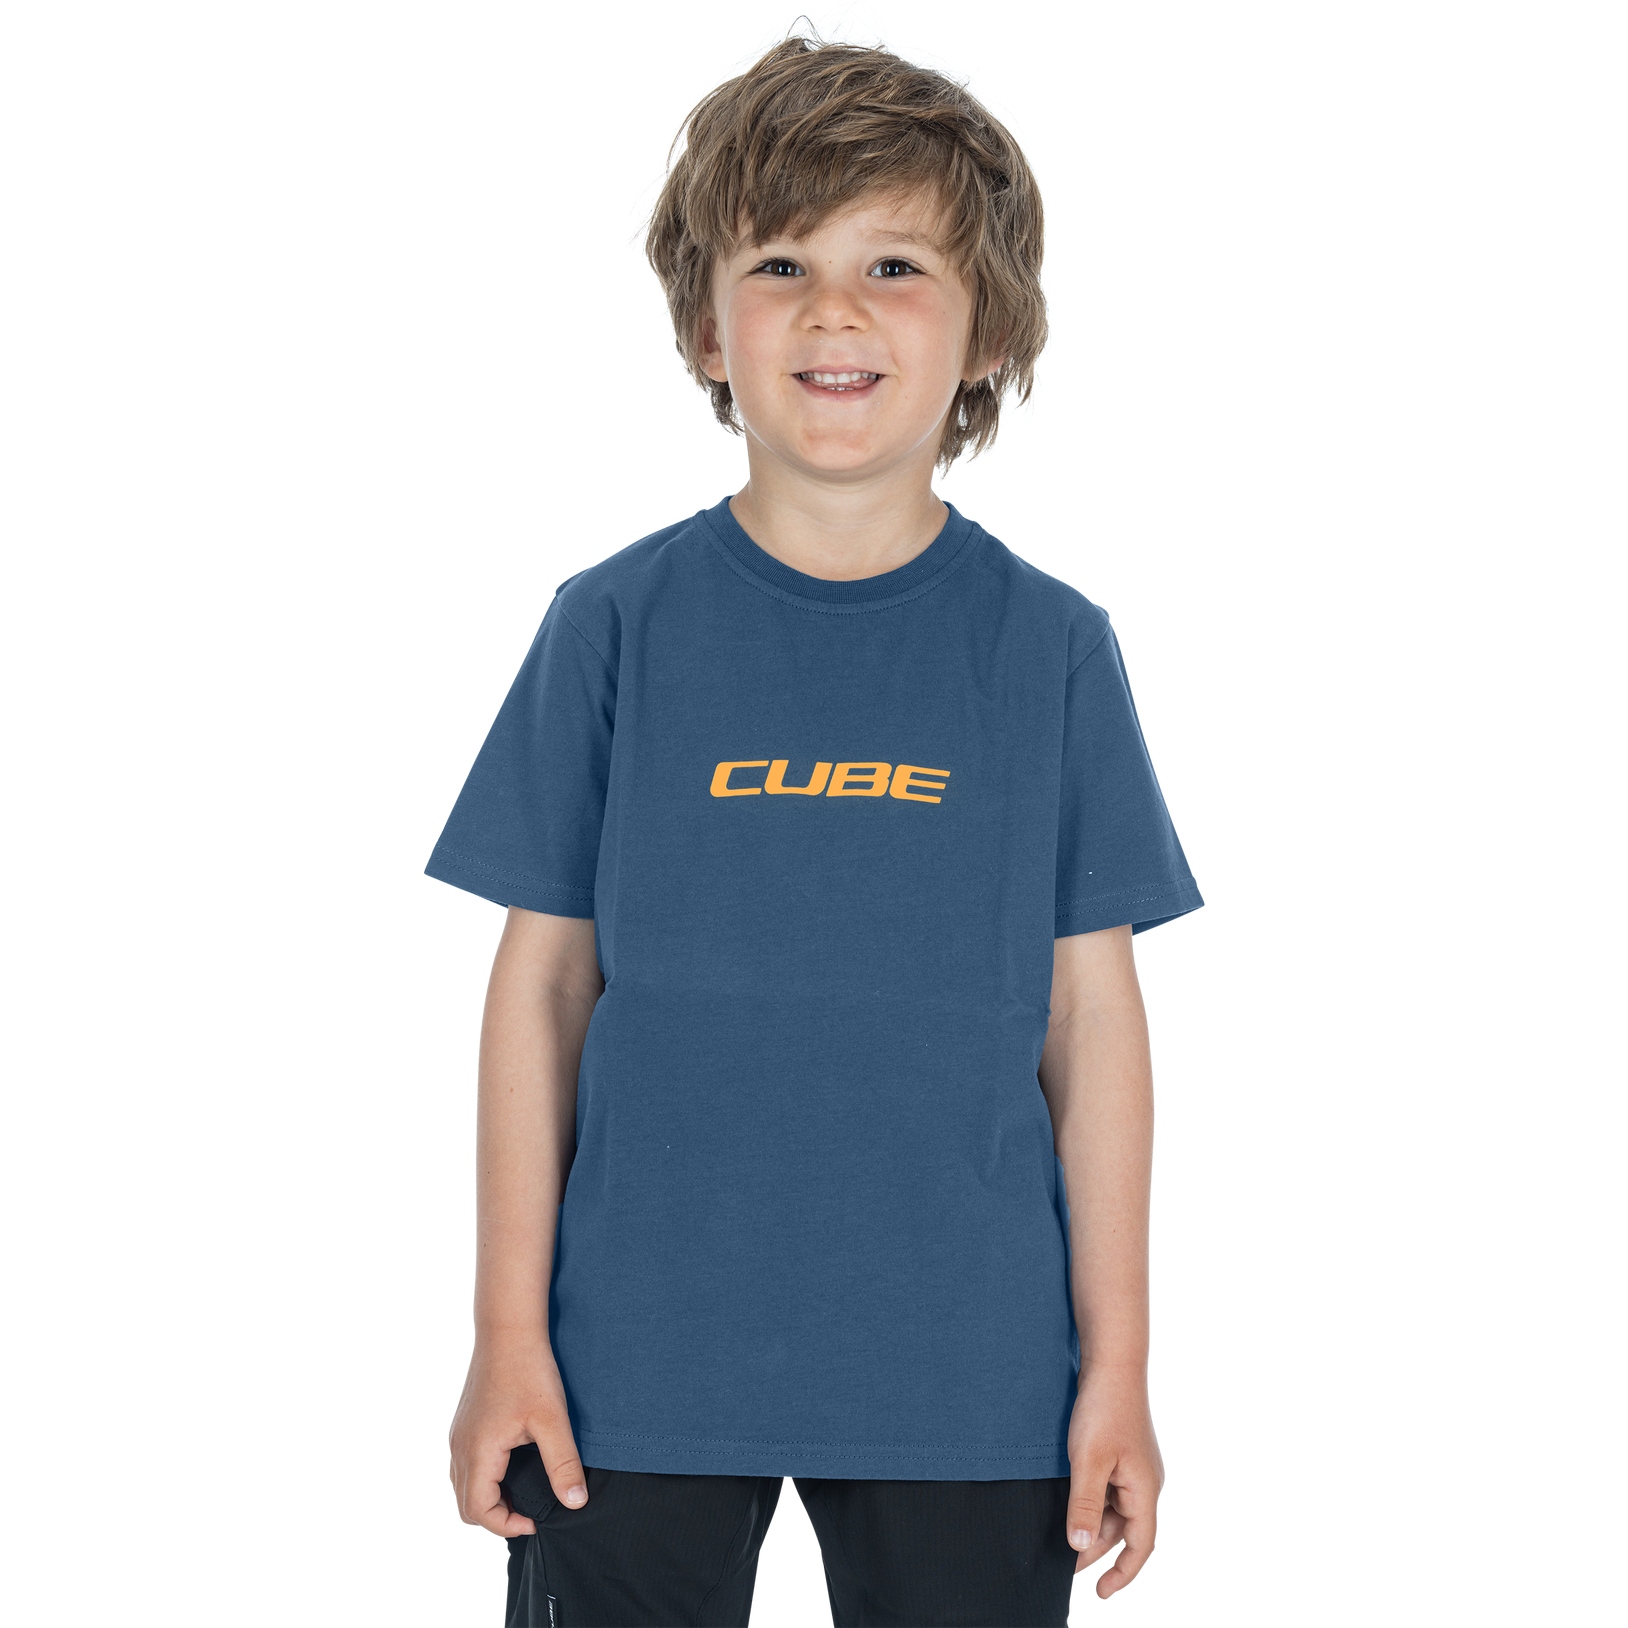 Productfoto van CUBE Organic Mountains T-Shirt Kinderen - blauw